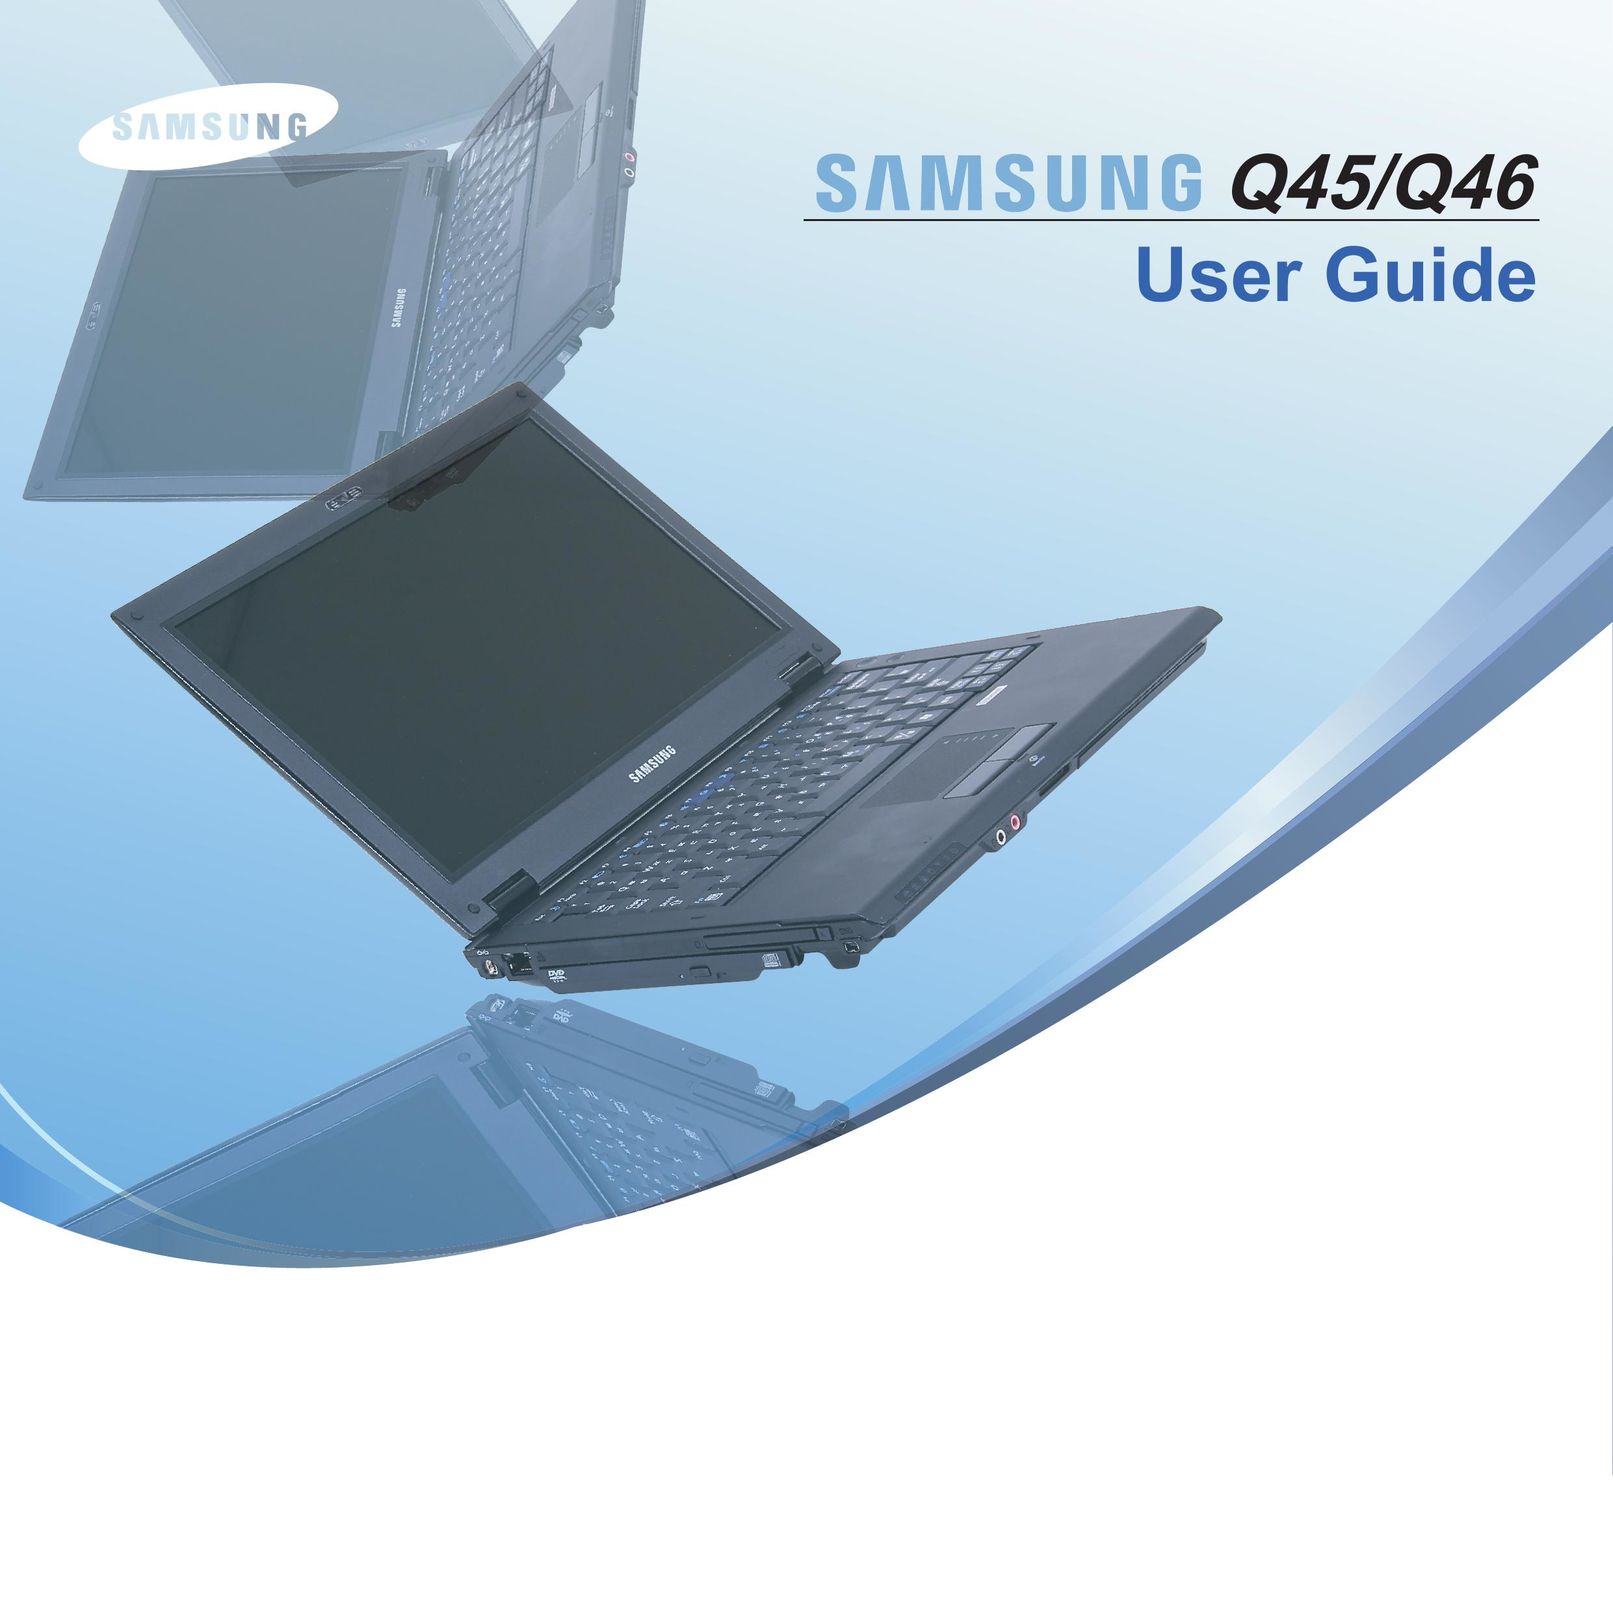 Samsung HTQ45 Stereo System User Manual